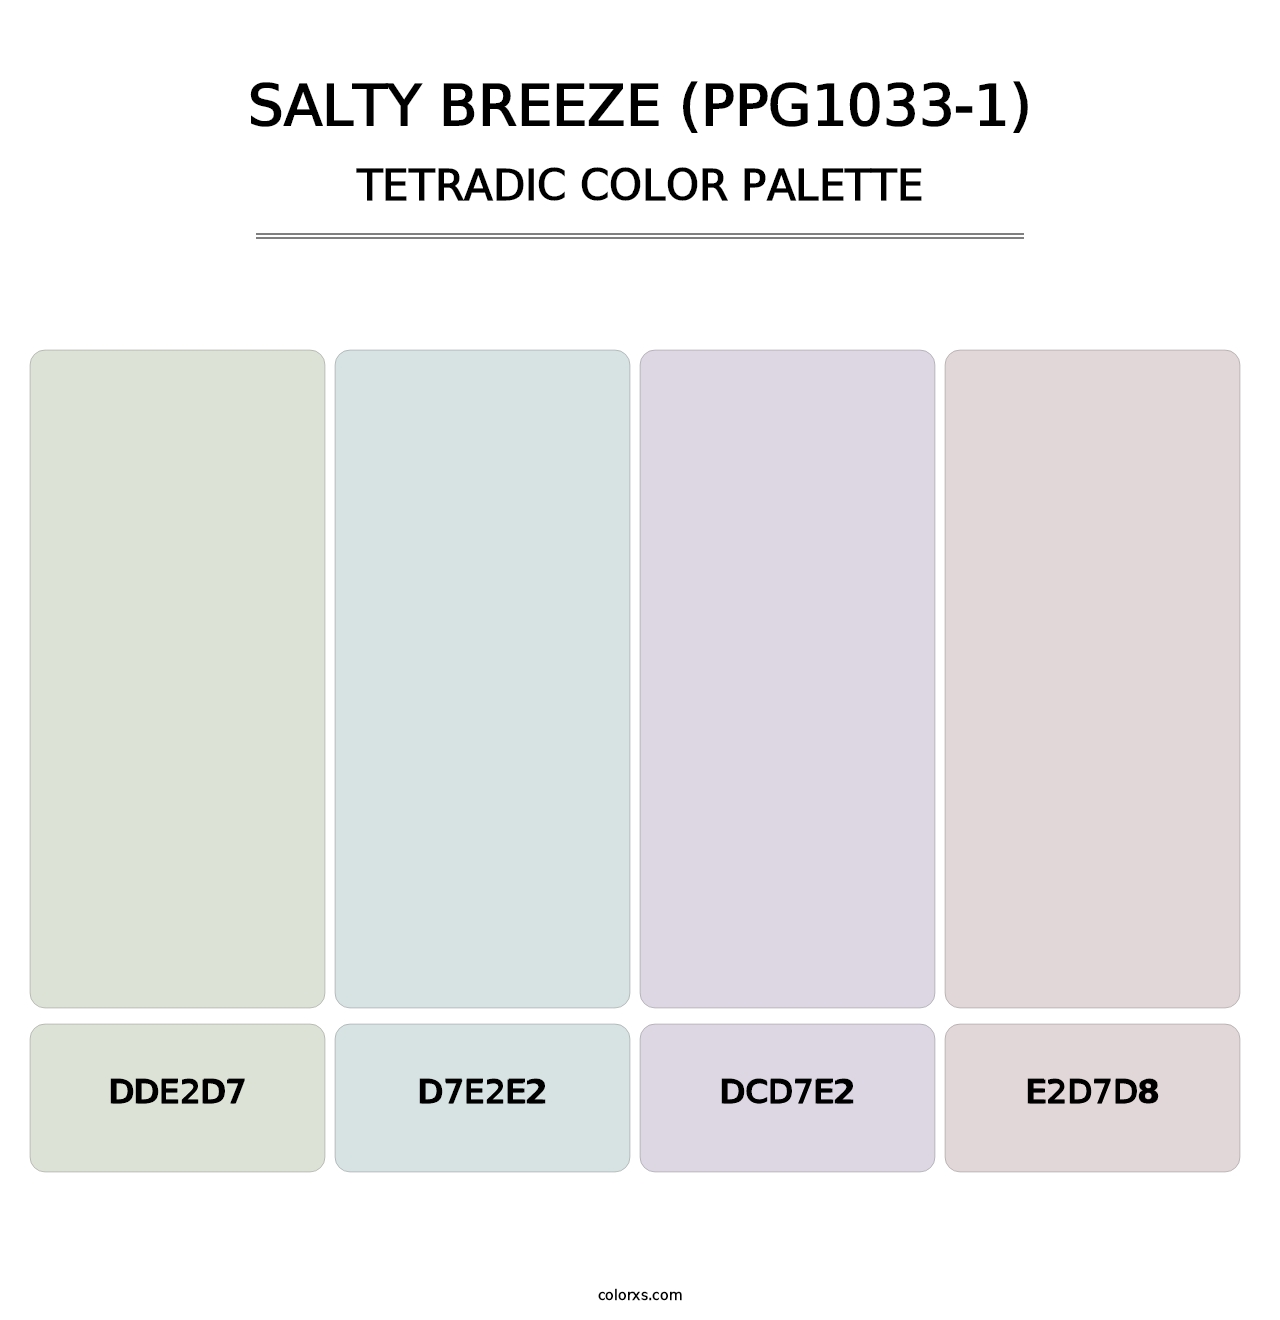 Salty Breeze (PPG1033-1) - Tetradic Color Palette